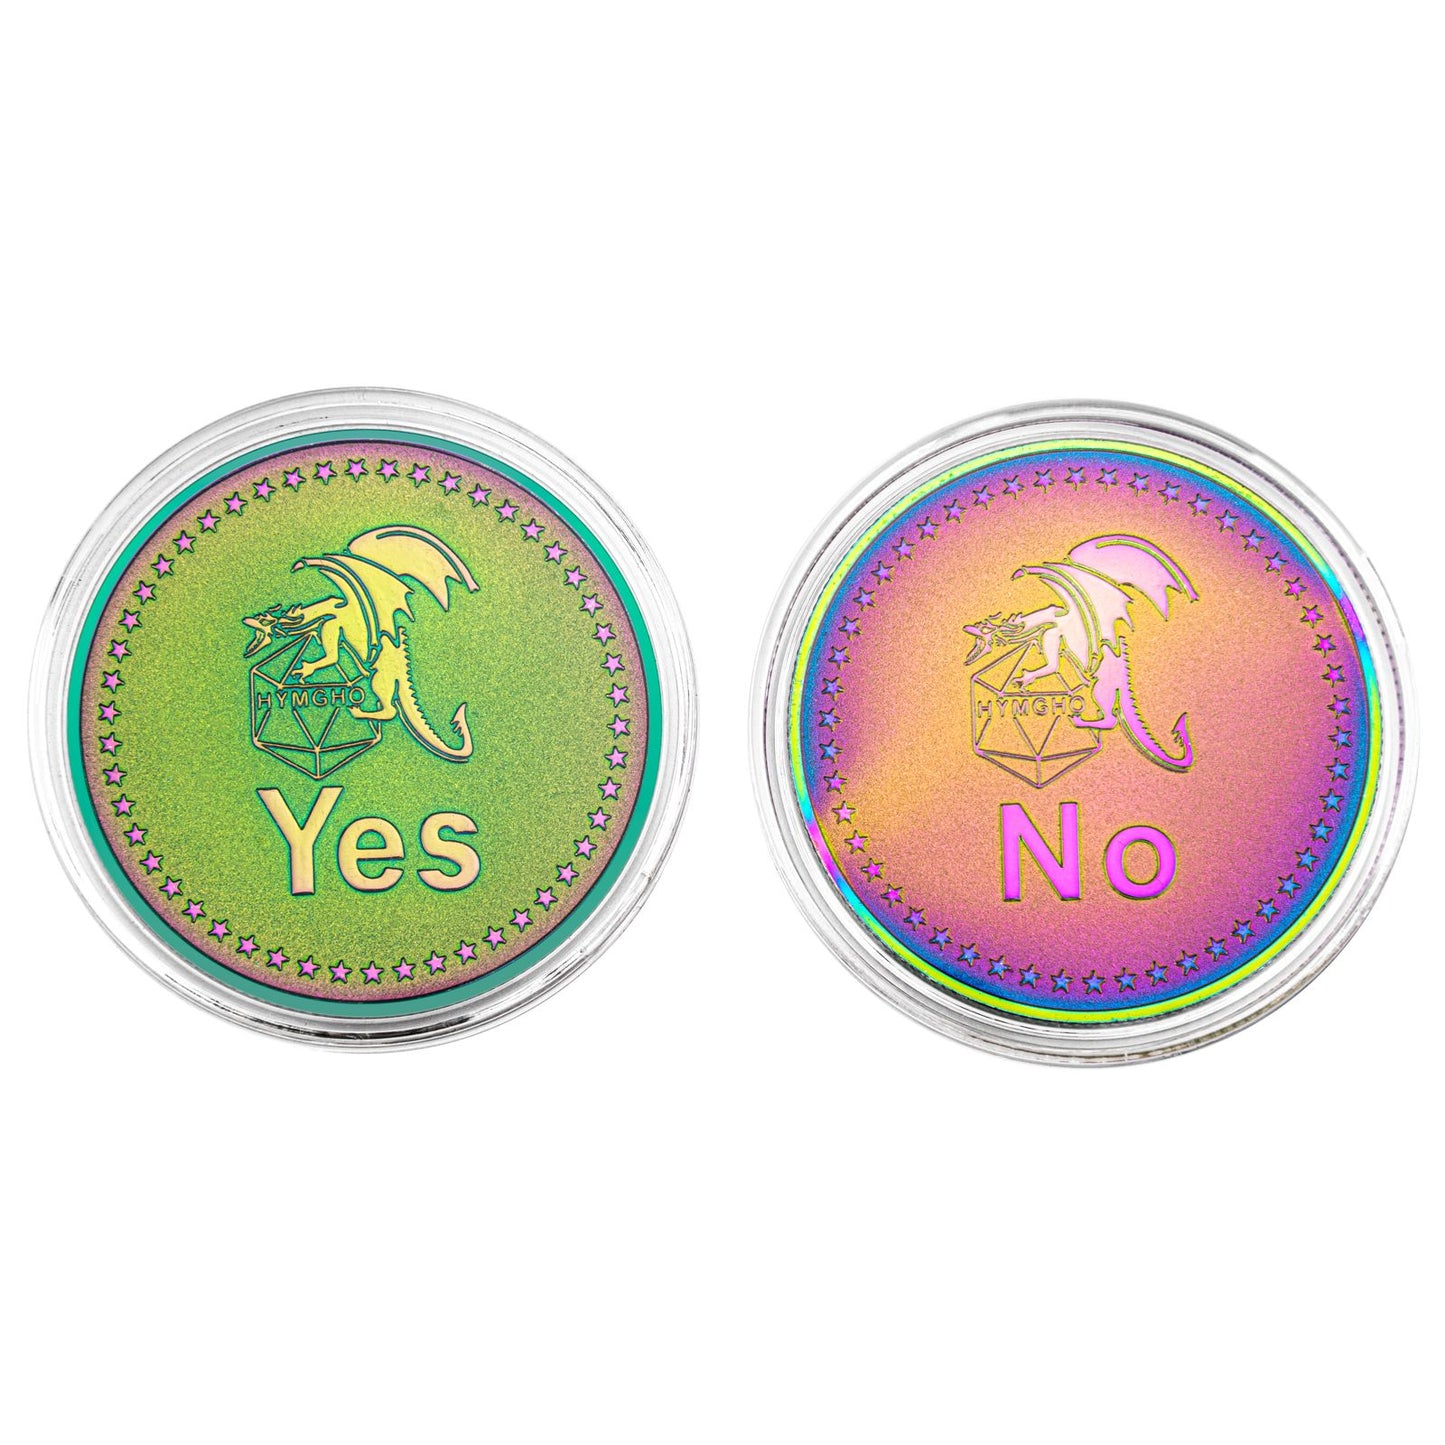 HYMGHO YES/NO Deluxe D2 coin Rainbow